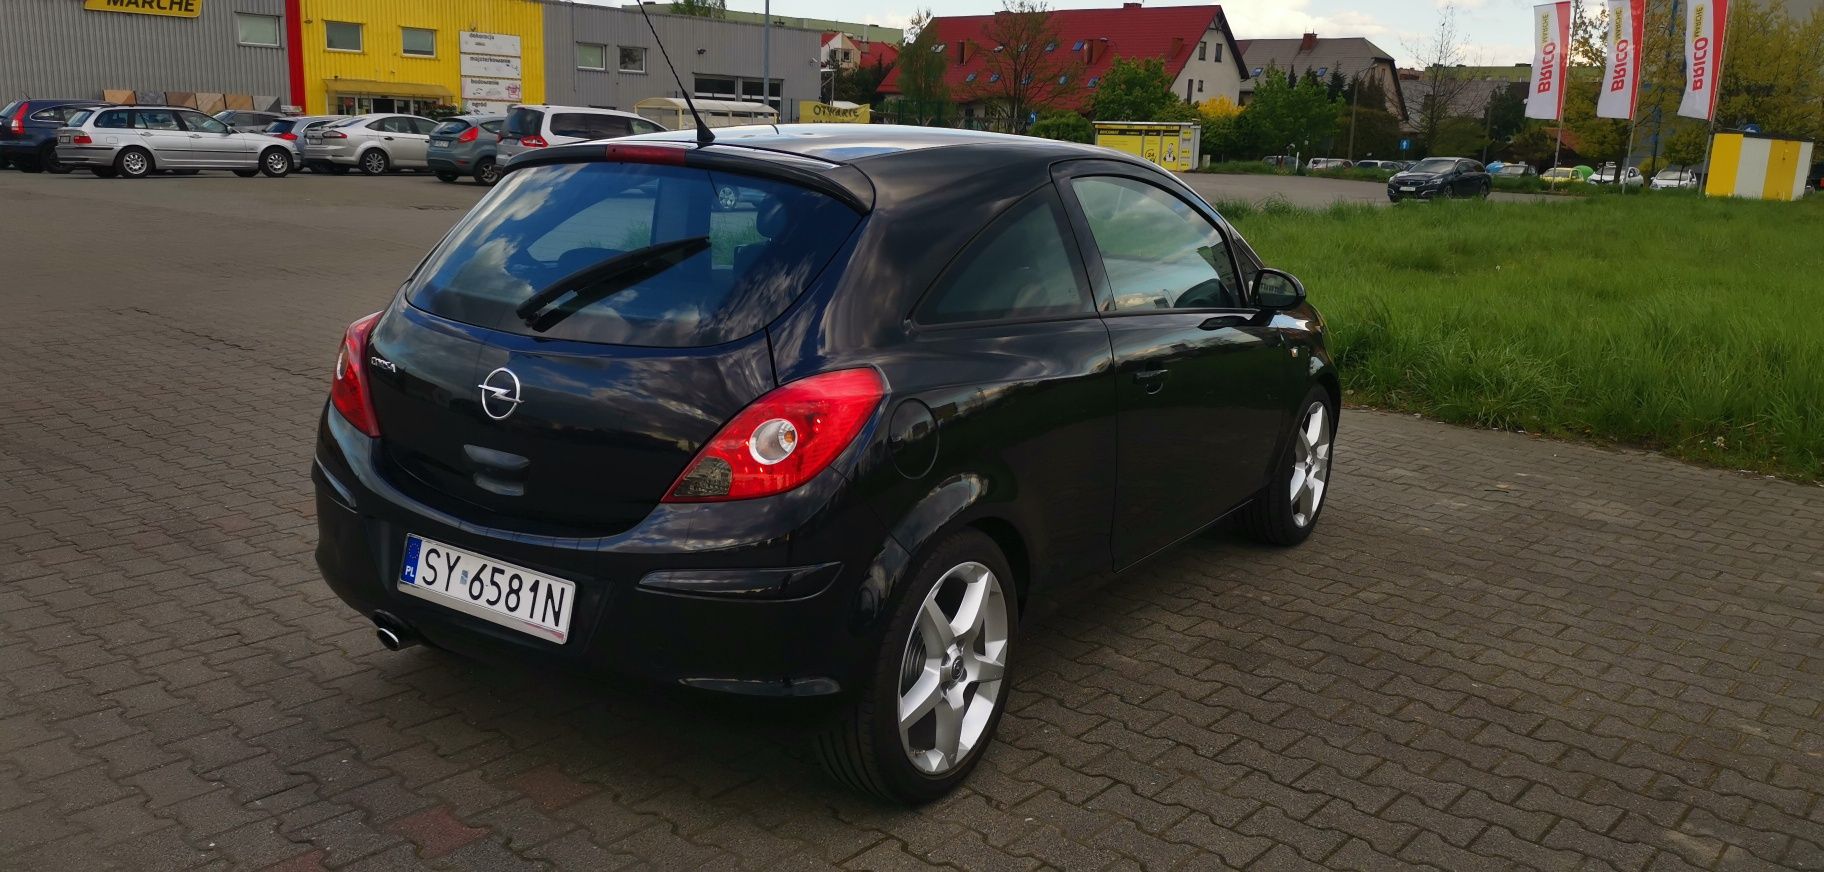 Opel corsa D 1.2 16v